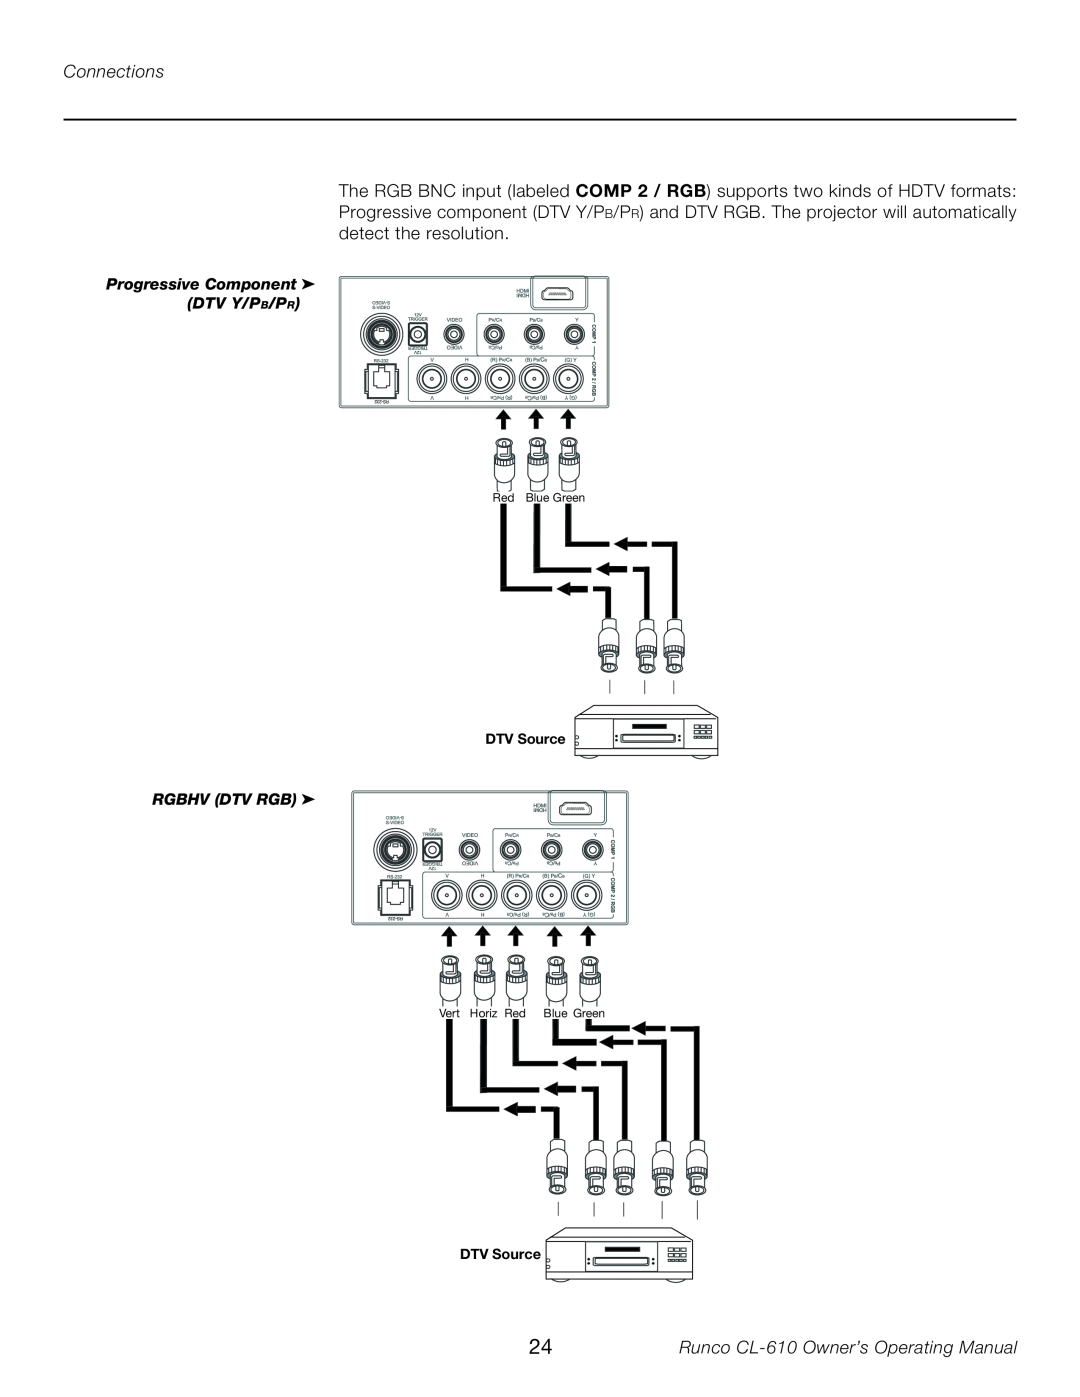 Runco CL-610LT manual Connections, Runco CL-610 Owner’s Operating Manual, Progressive Component DTV Y/PB/PR, Rgbhv Dtv Rgb 